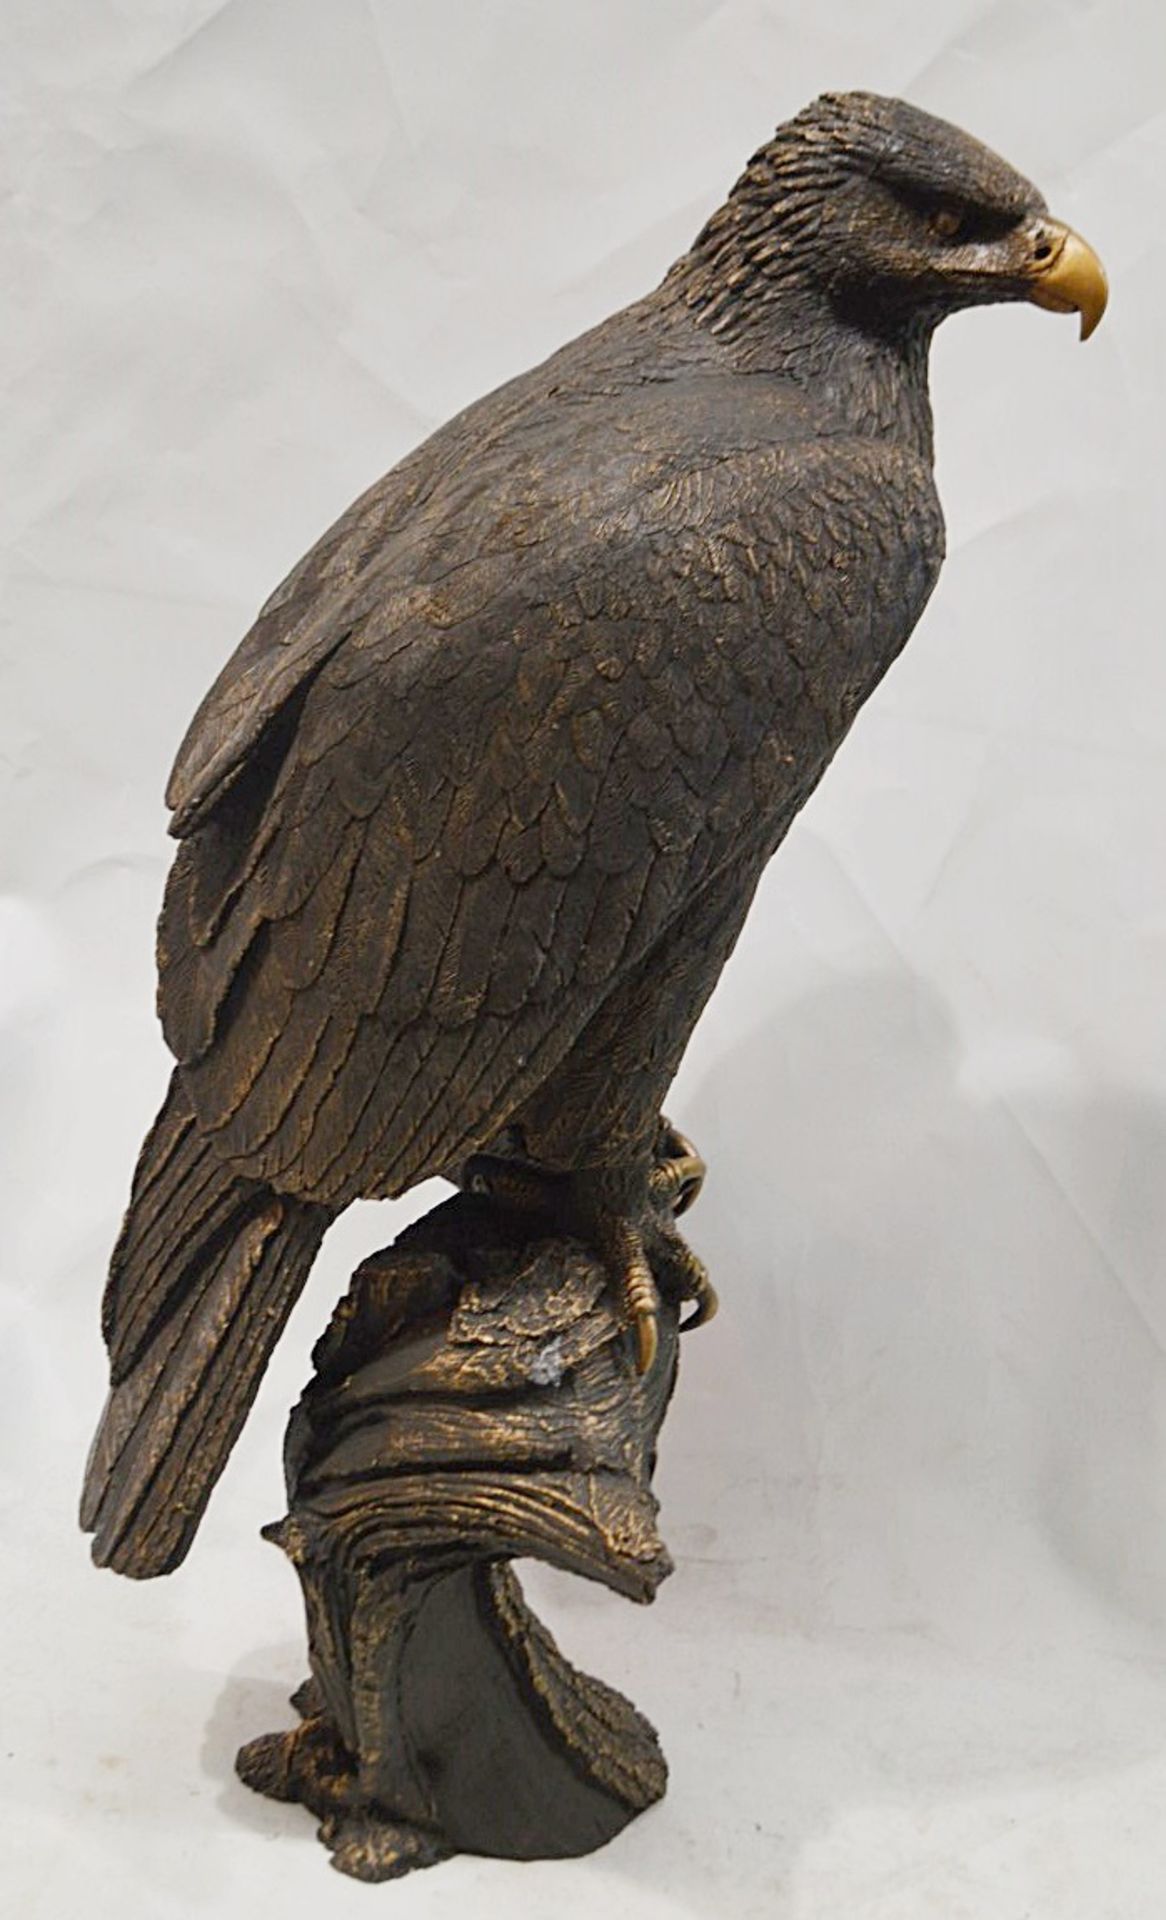 1 x Stefano Ricci Ornamental 1-Metre Tall Eagle Statue - Unique And Beautiful Designer Display Piece - Image 5 of 5